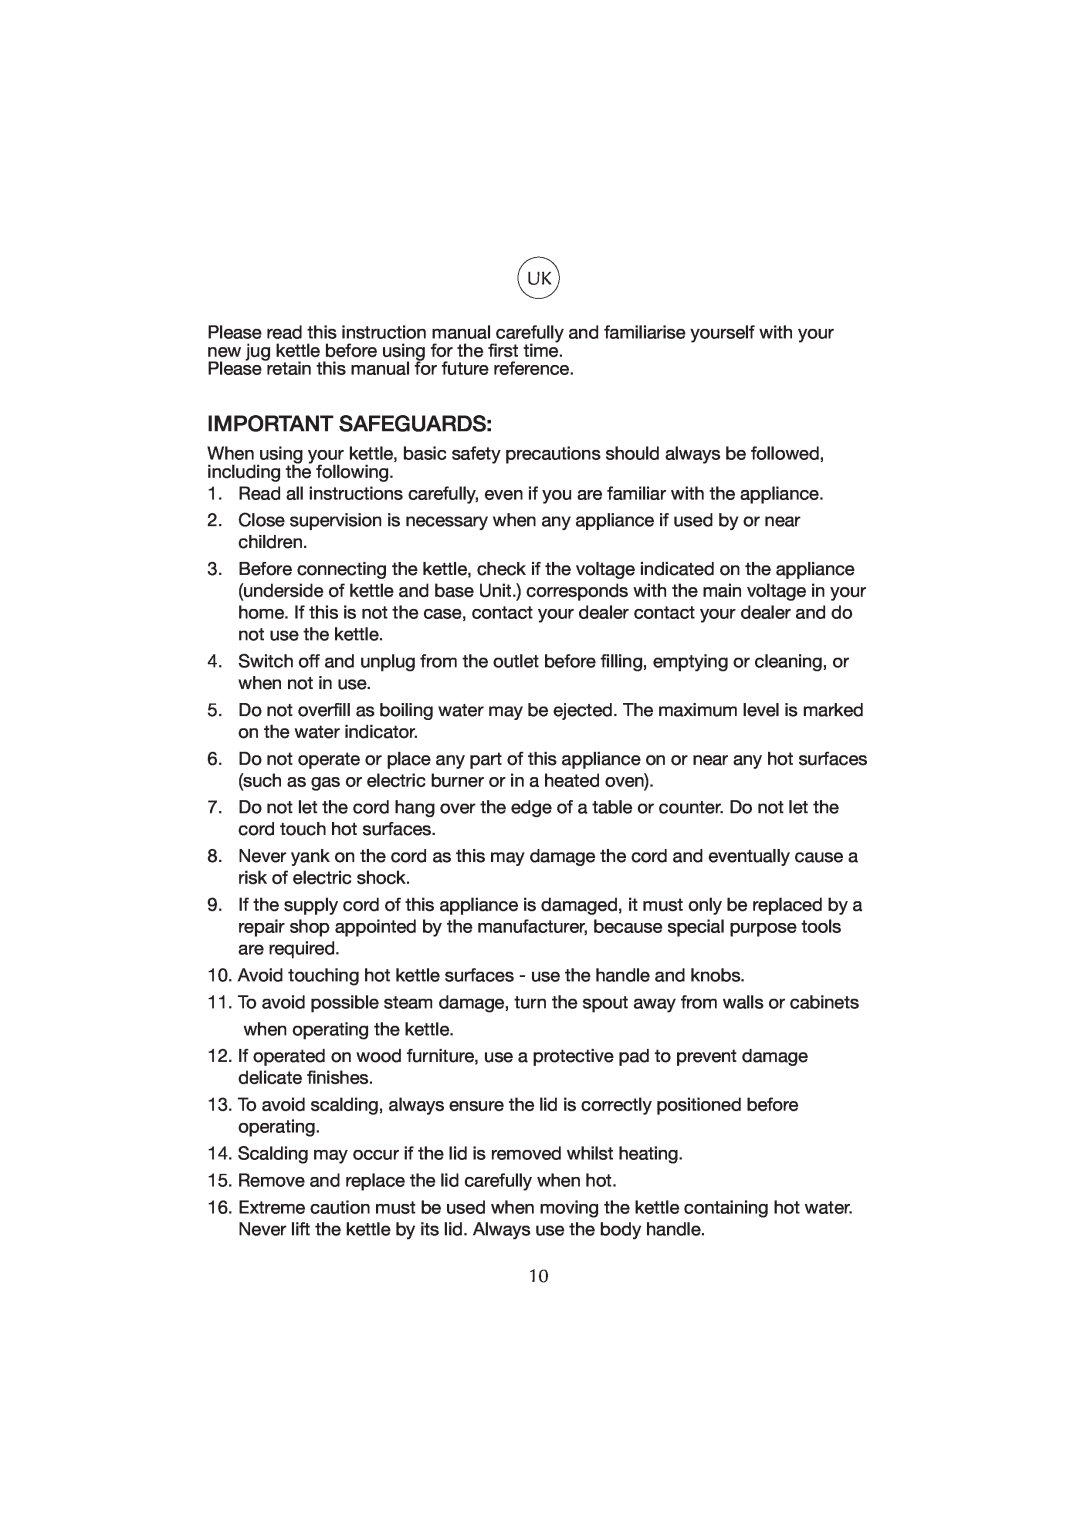 Melissa WK-222 manual Important Safeguards 